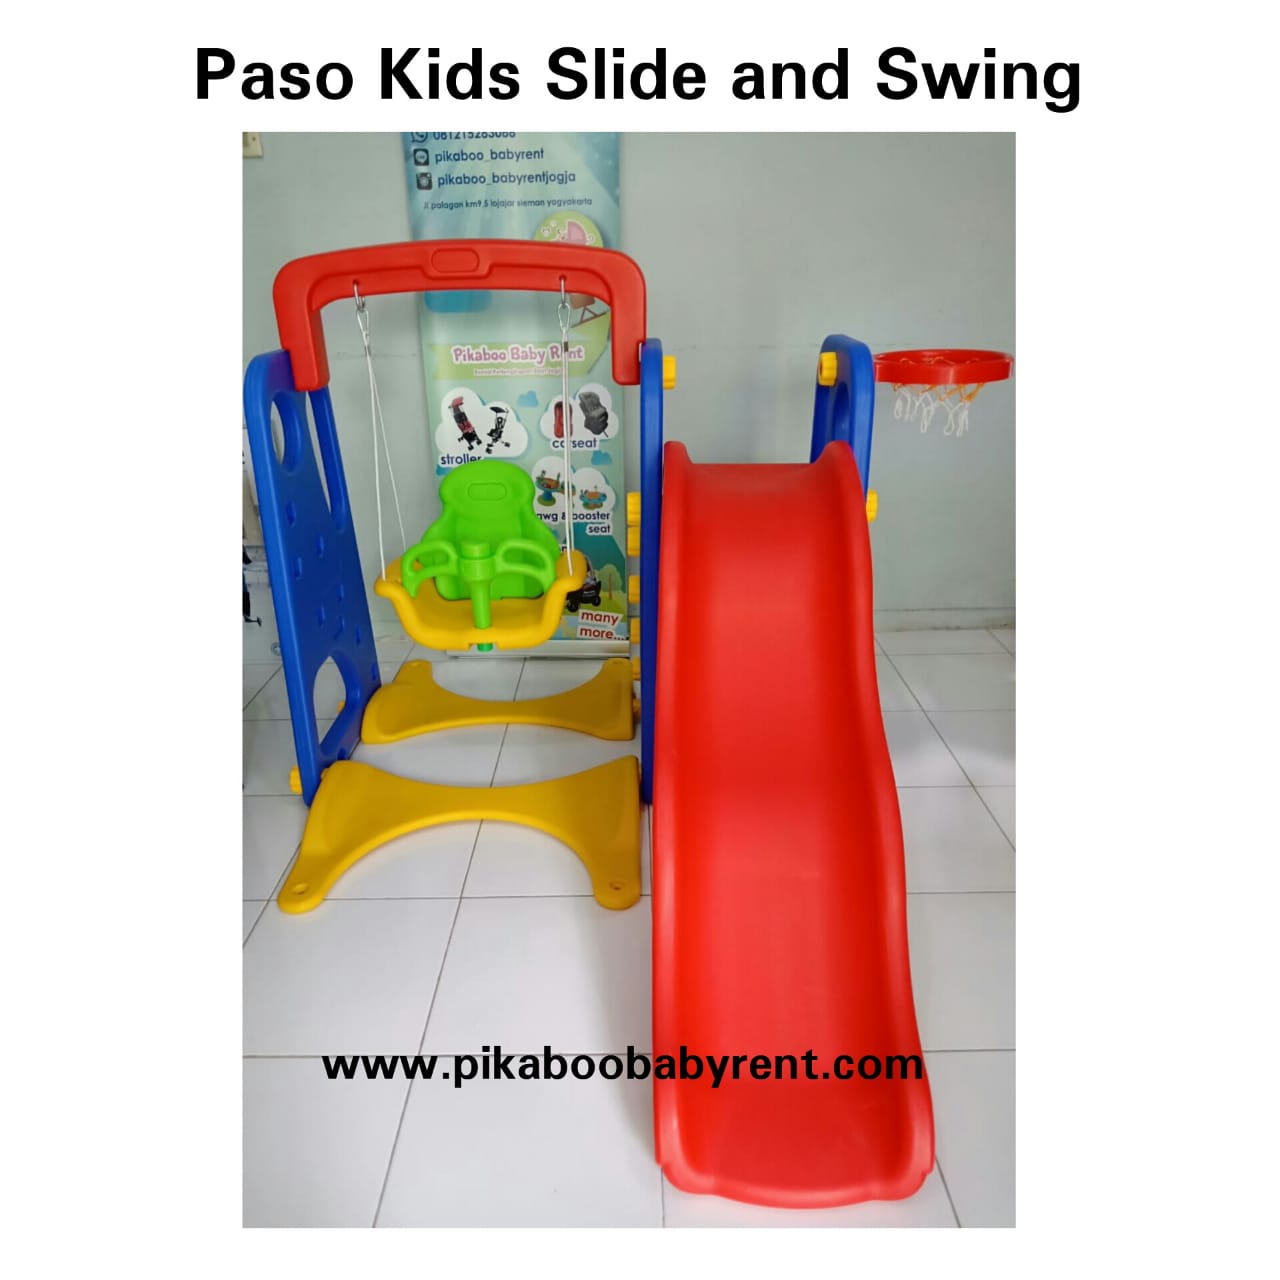 PASO KIDS 4IN1 SLIDE WITH SWING GREEN